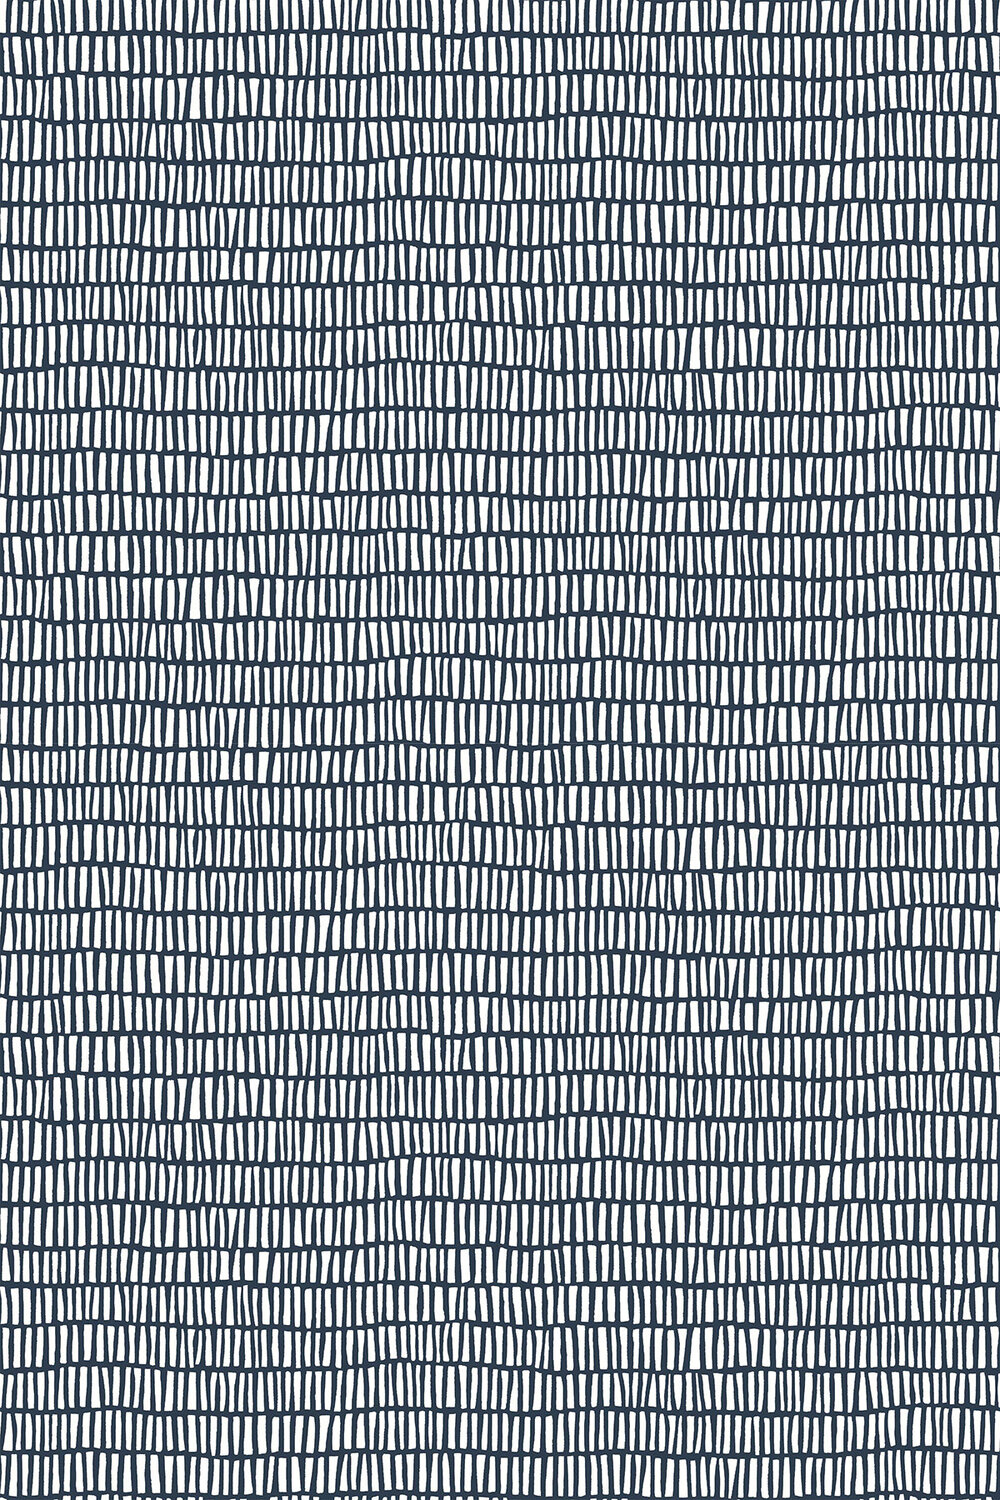 Tocca Fabric - Denim - by Scion